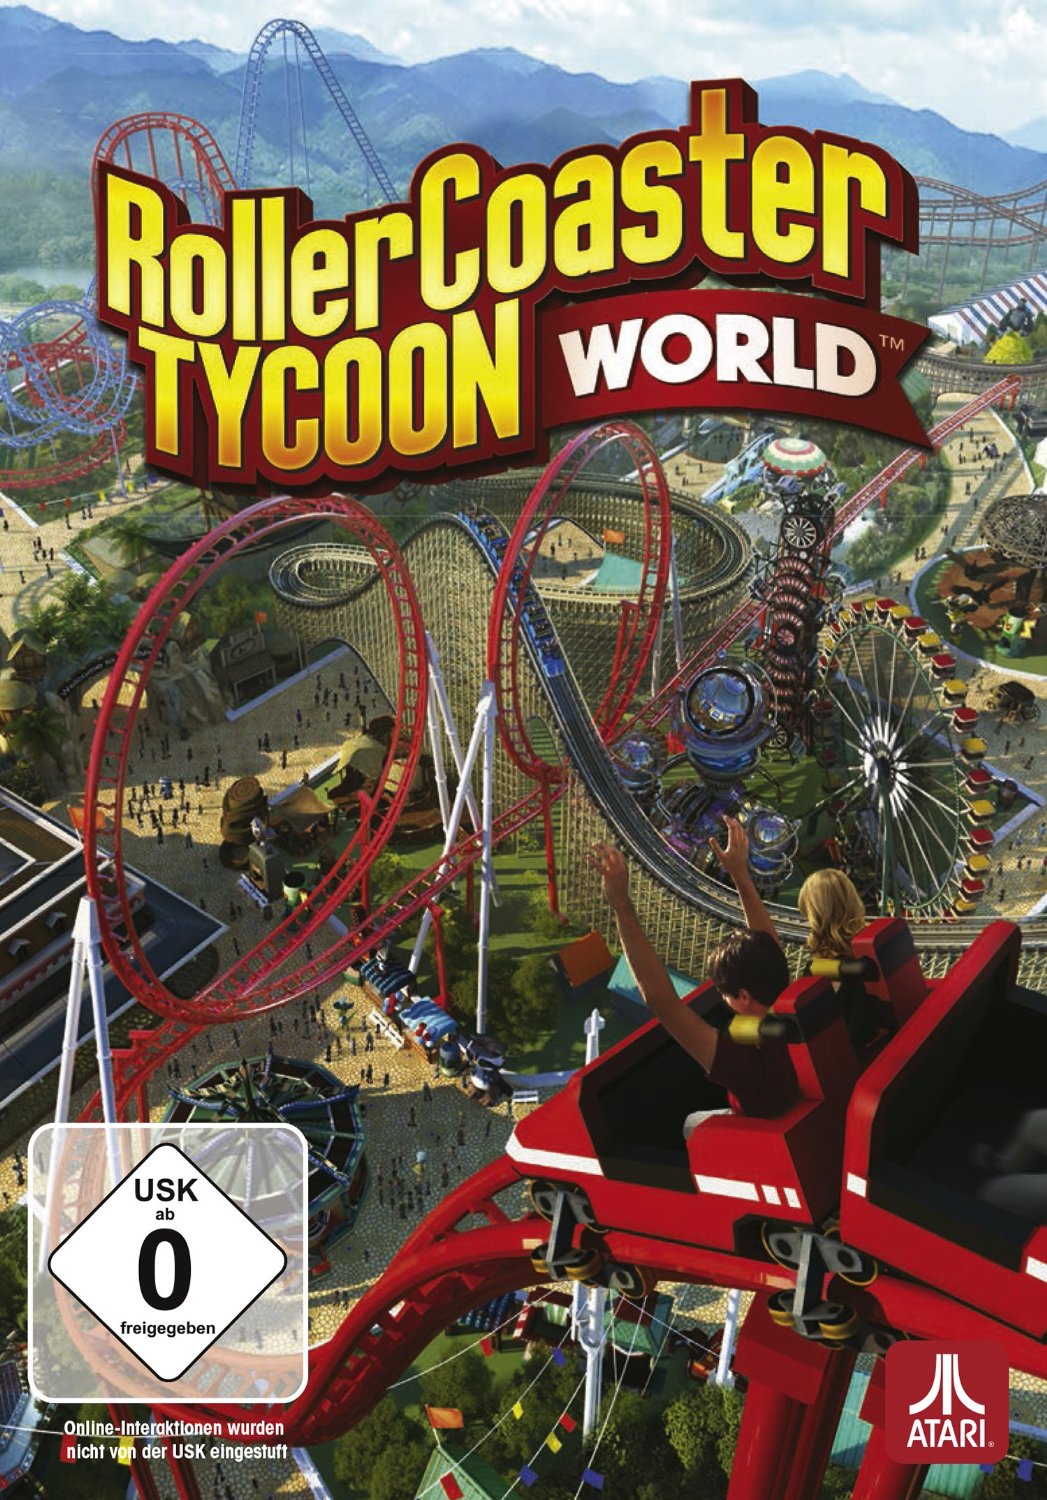 rollercoaster-tycoon-world-usk-packshot-nat-games